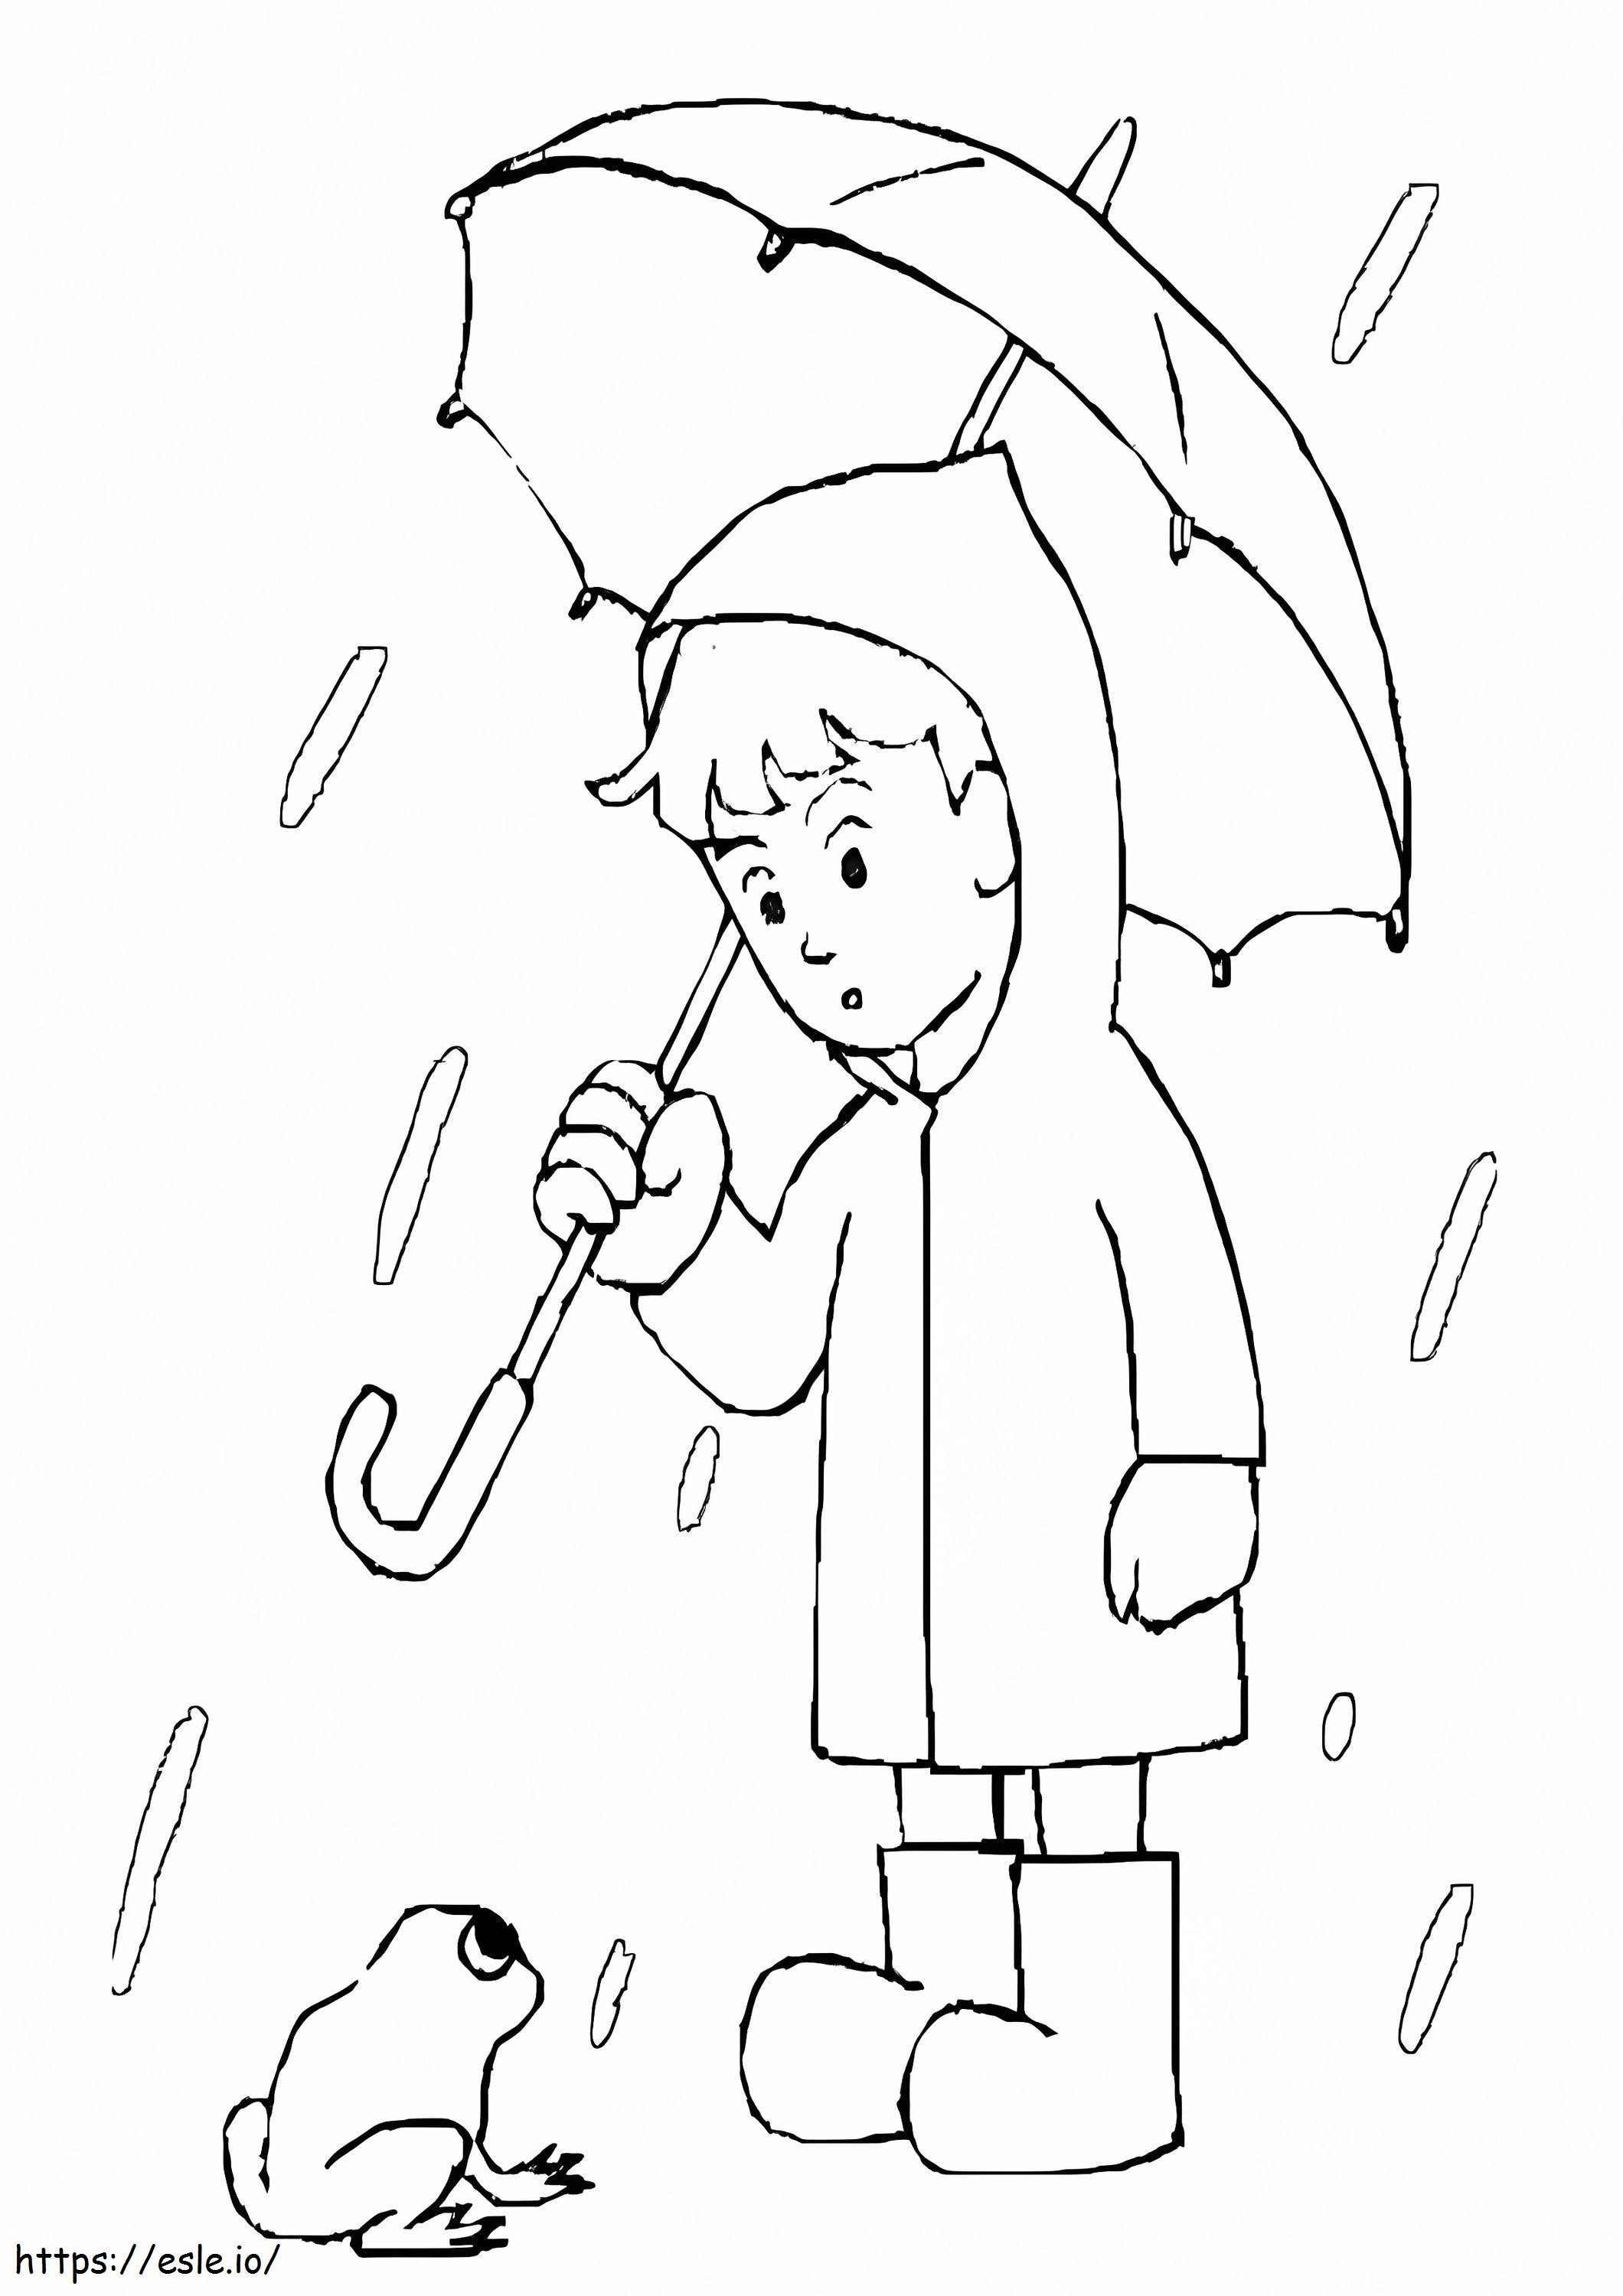 Boy Holding Umbrella coloring page